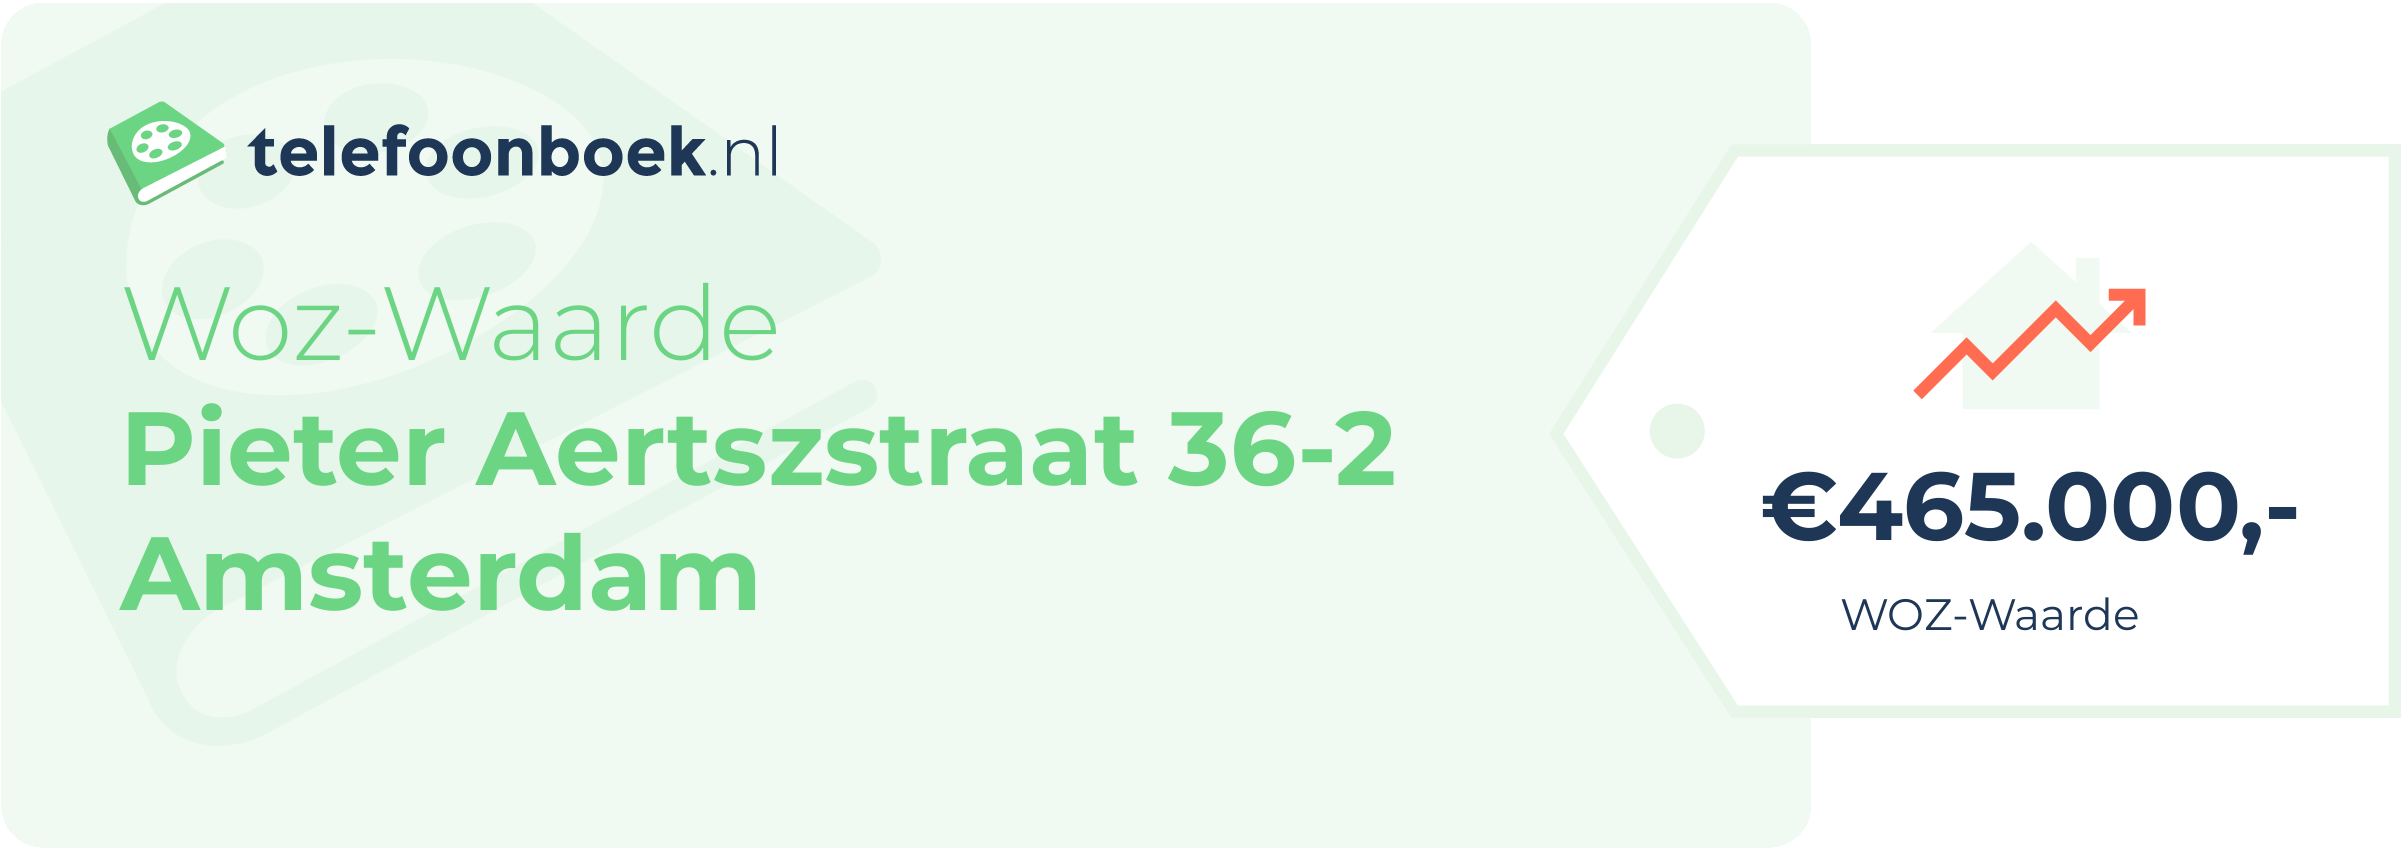 WOZ-waarde Pieter Aertszstraat 36-2 Amsterdam